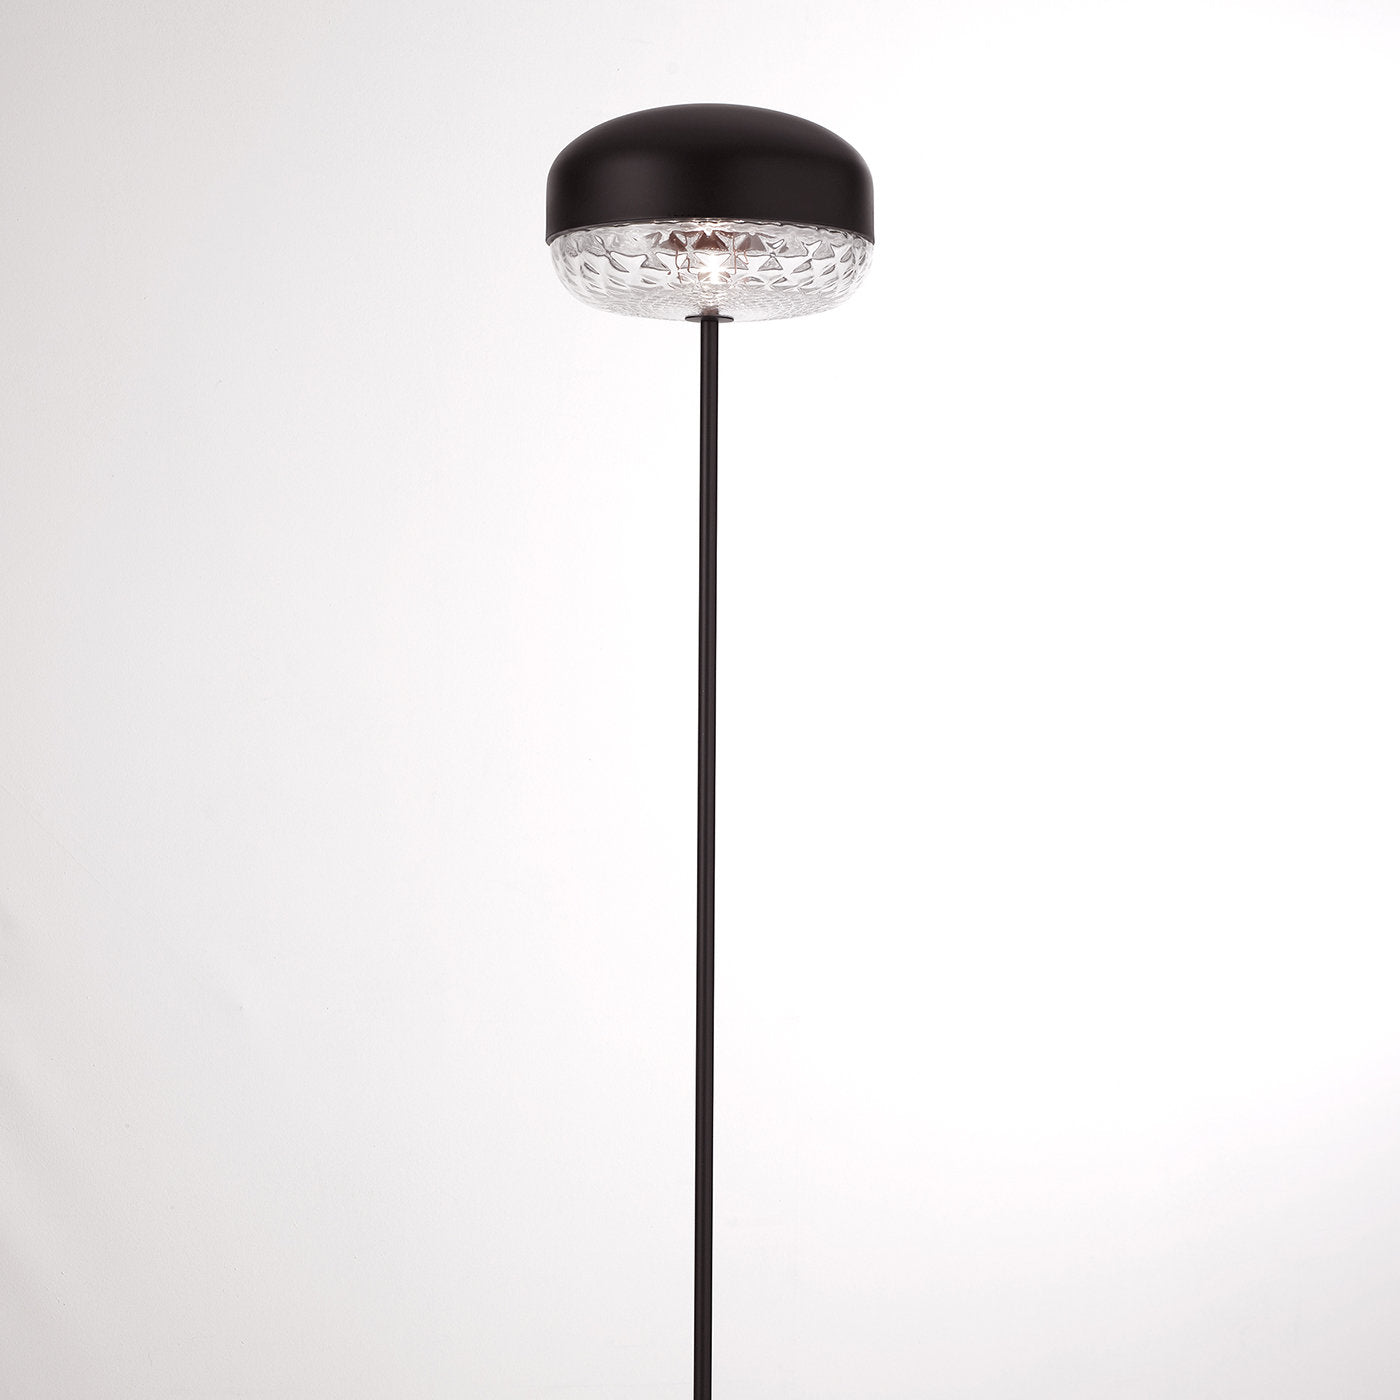 Balloton Floor Lamp by Matteo Zorzenoni - Alternative view 1